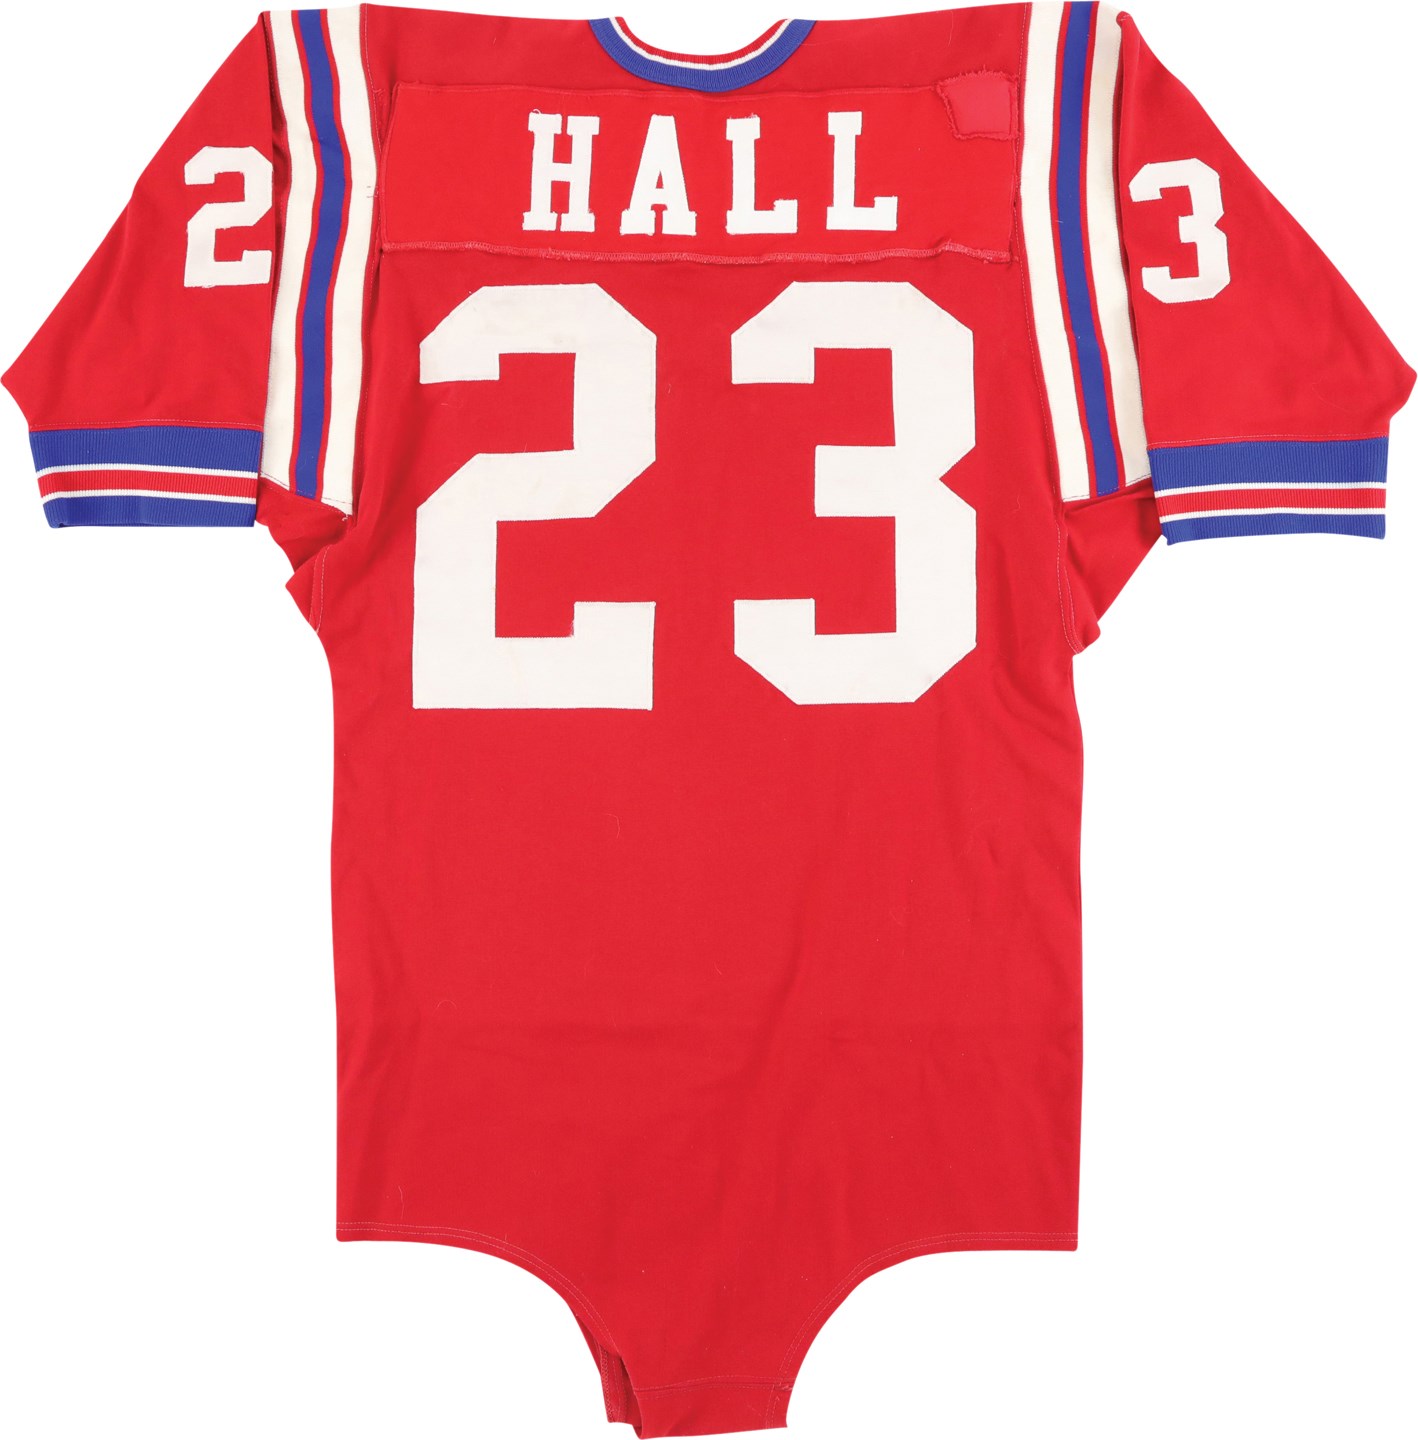 - Rare 1967 Ron Hall Boston Patriots Game Worn Jersey (Hall LOA)